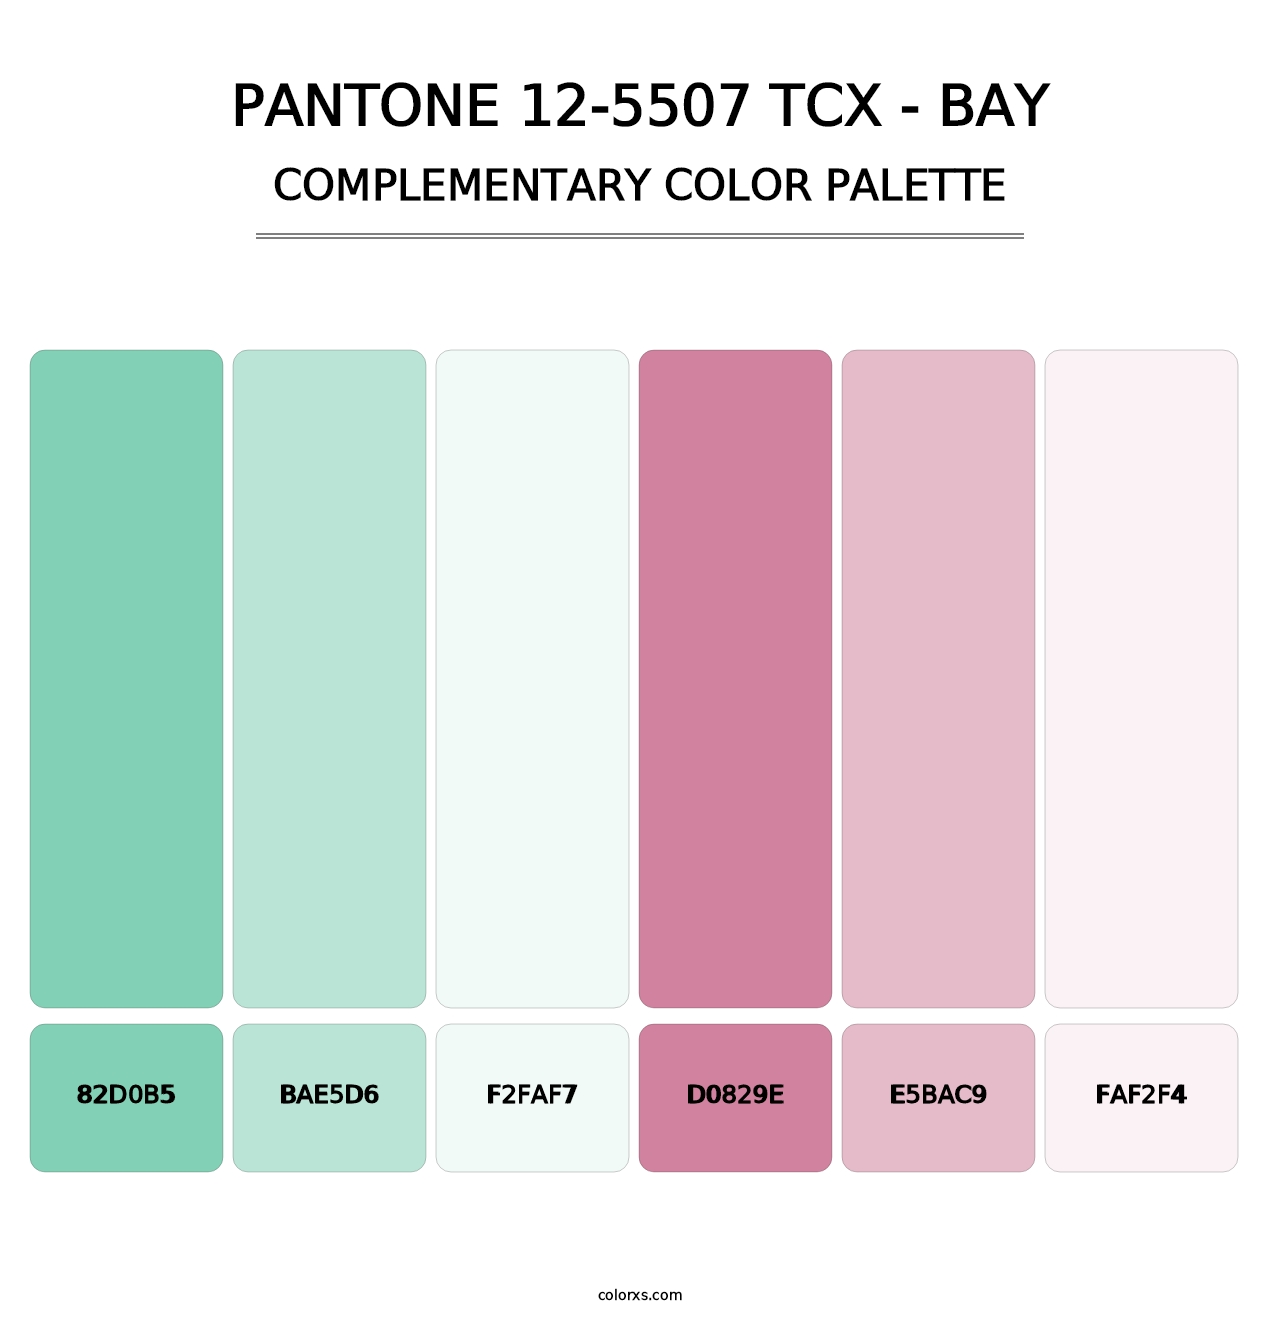 PANTONE 12-5507 TCX - Bay - Complementary Color Palette